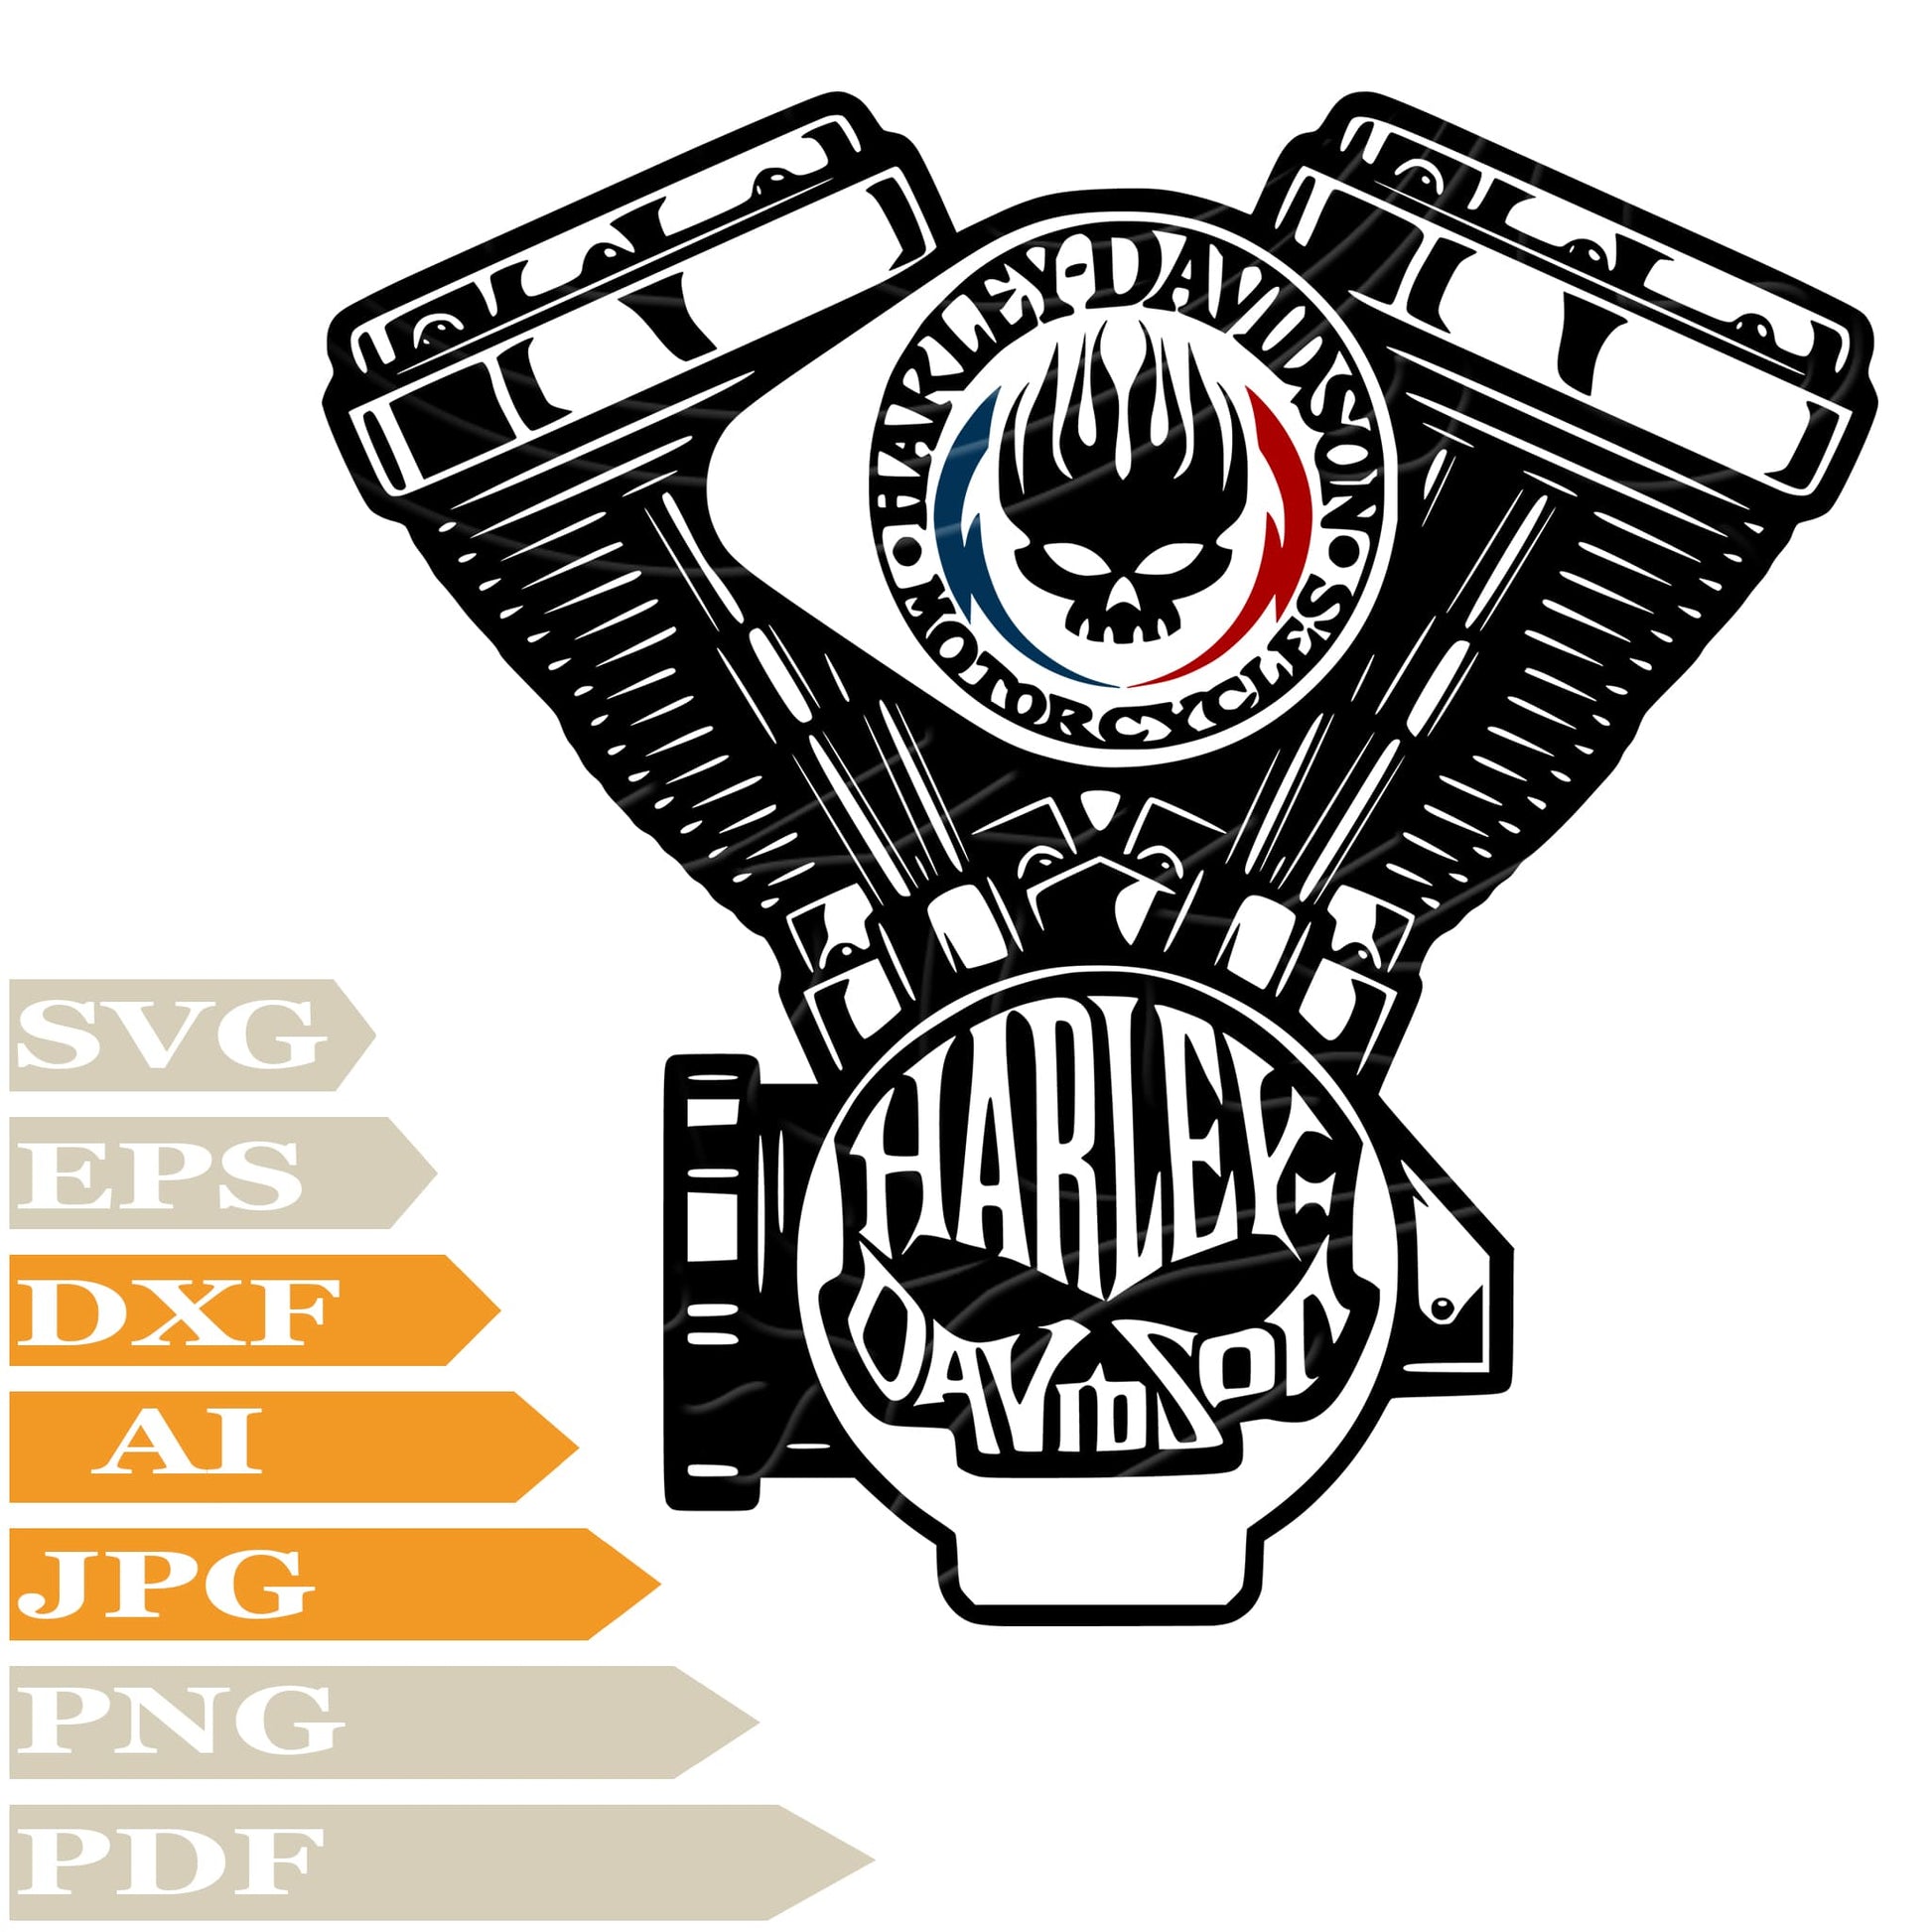 Harley Davidson Logo SVG File - Harley Davidson Engine Vector Graphics - Harley Davidson Engine SVG Design - Harley Engine PNG-Cricut-Cut File-Clipart-For Tattoo-Print-Decal-Shirt-Silhouette